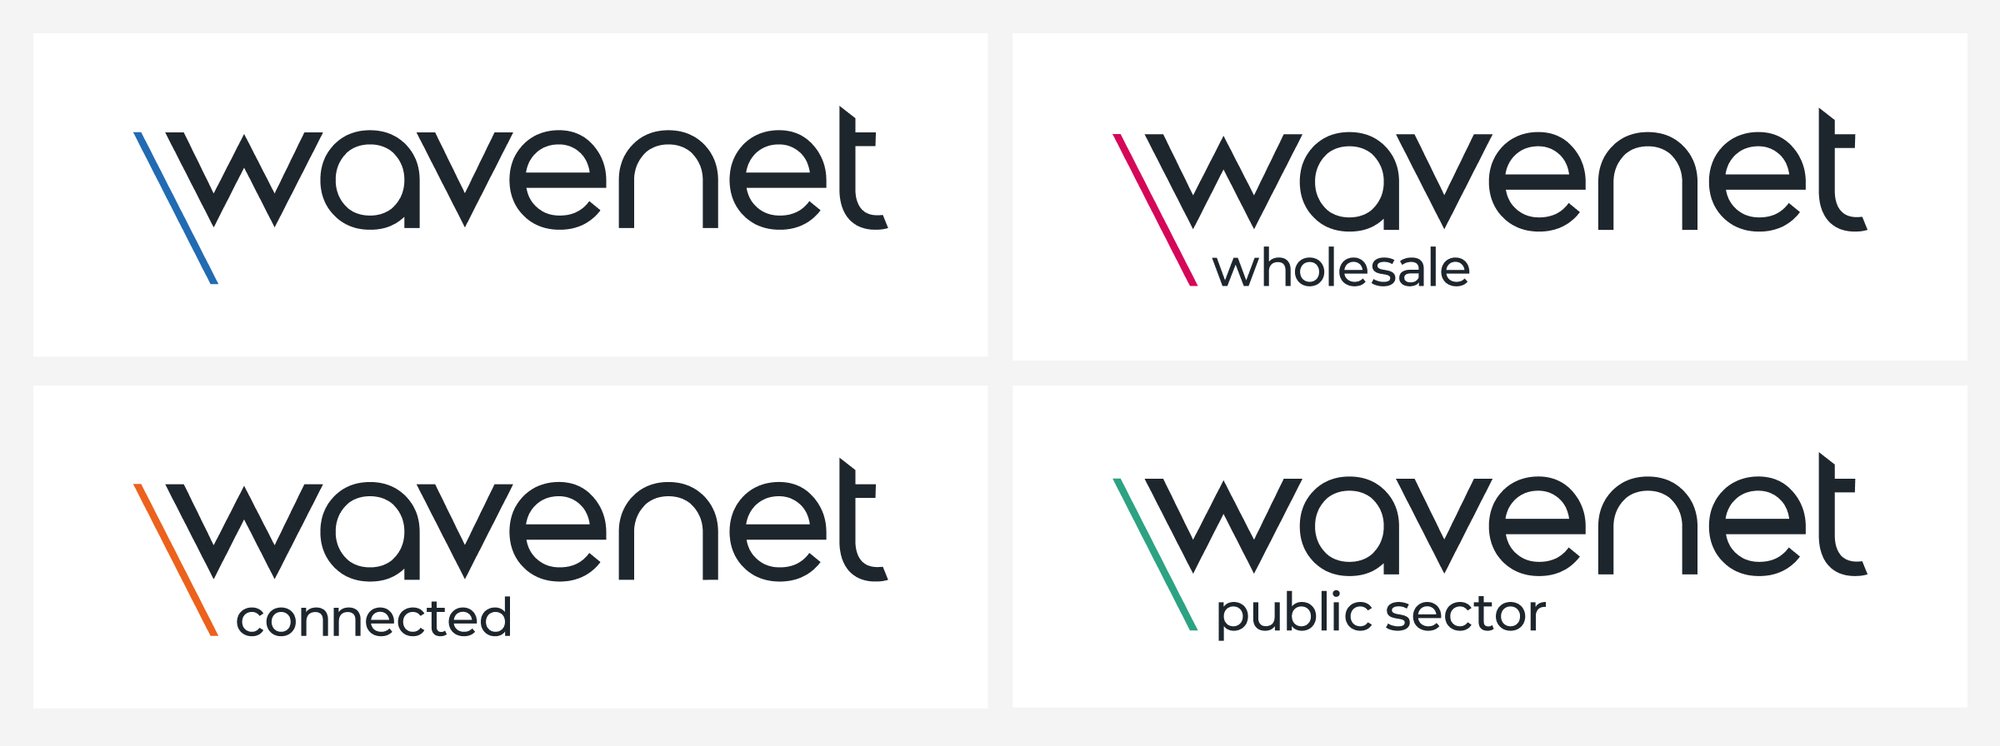 2_Wavenet logos